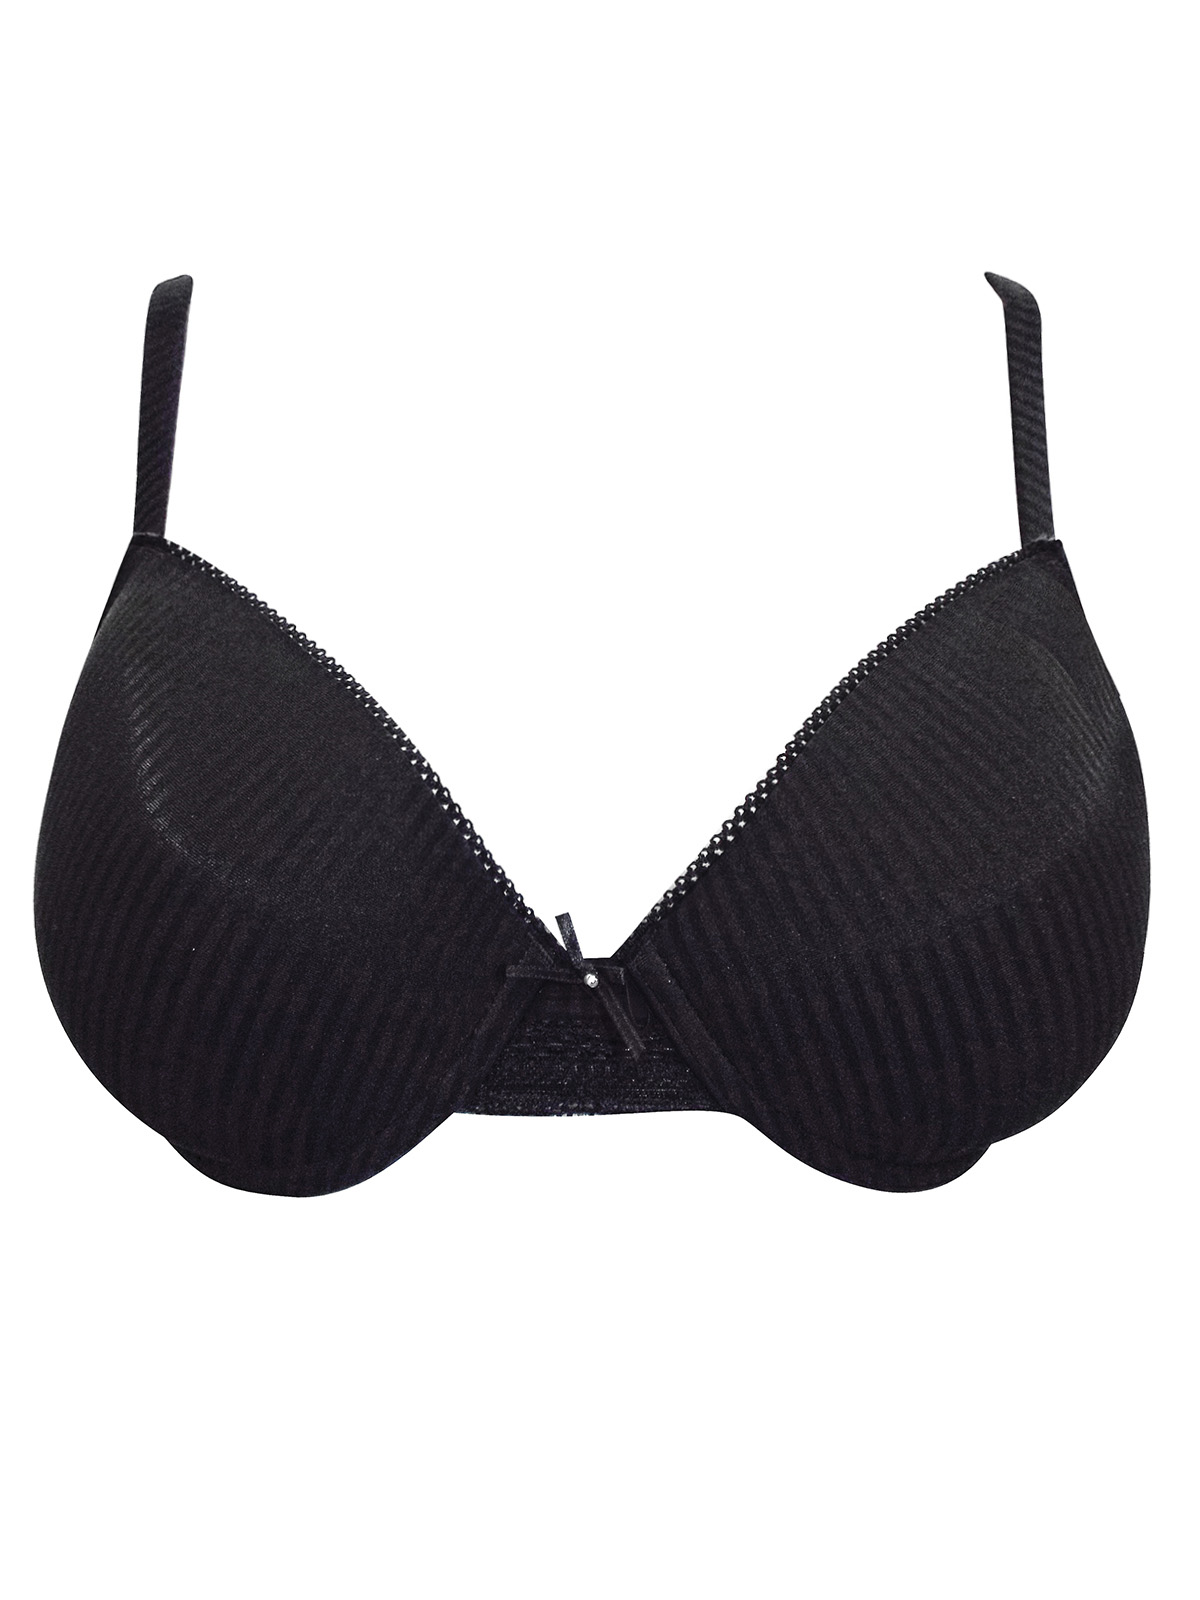 Victoria's Secret Black Full Coverage T-Shirt Push Up Bra - Size 32D - $8  (86% Off Retail) - From Lauren